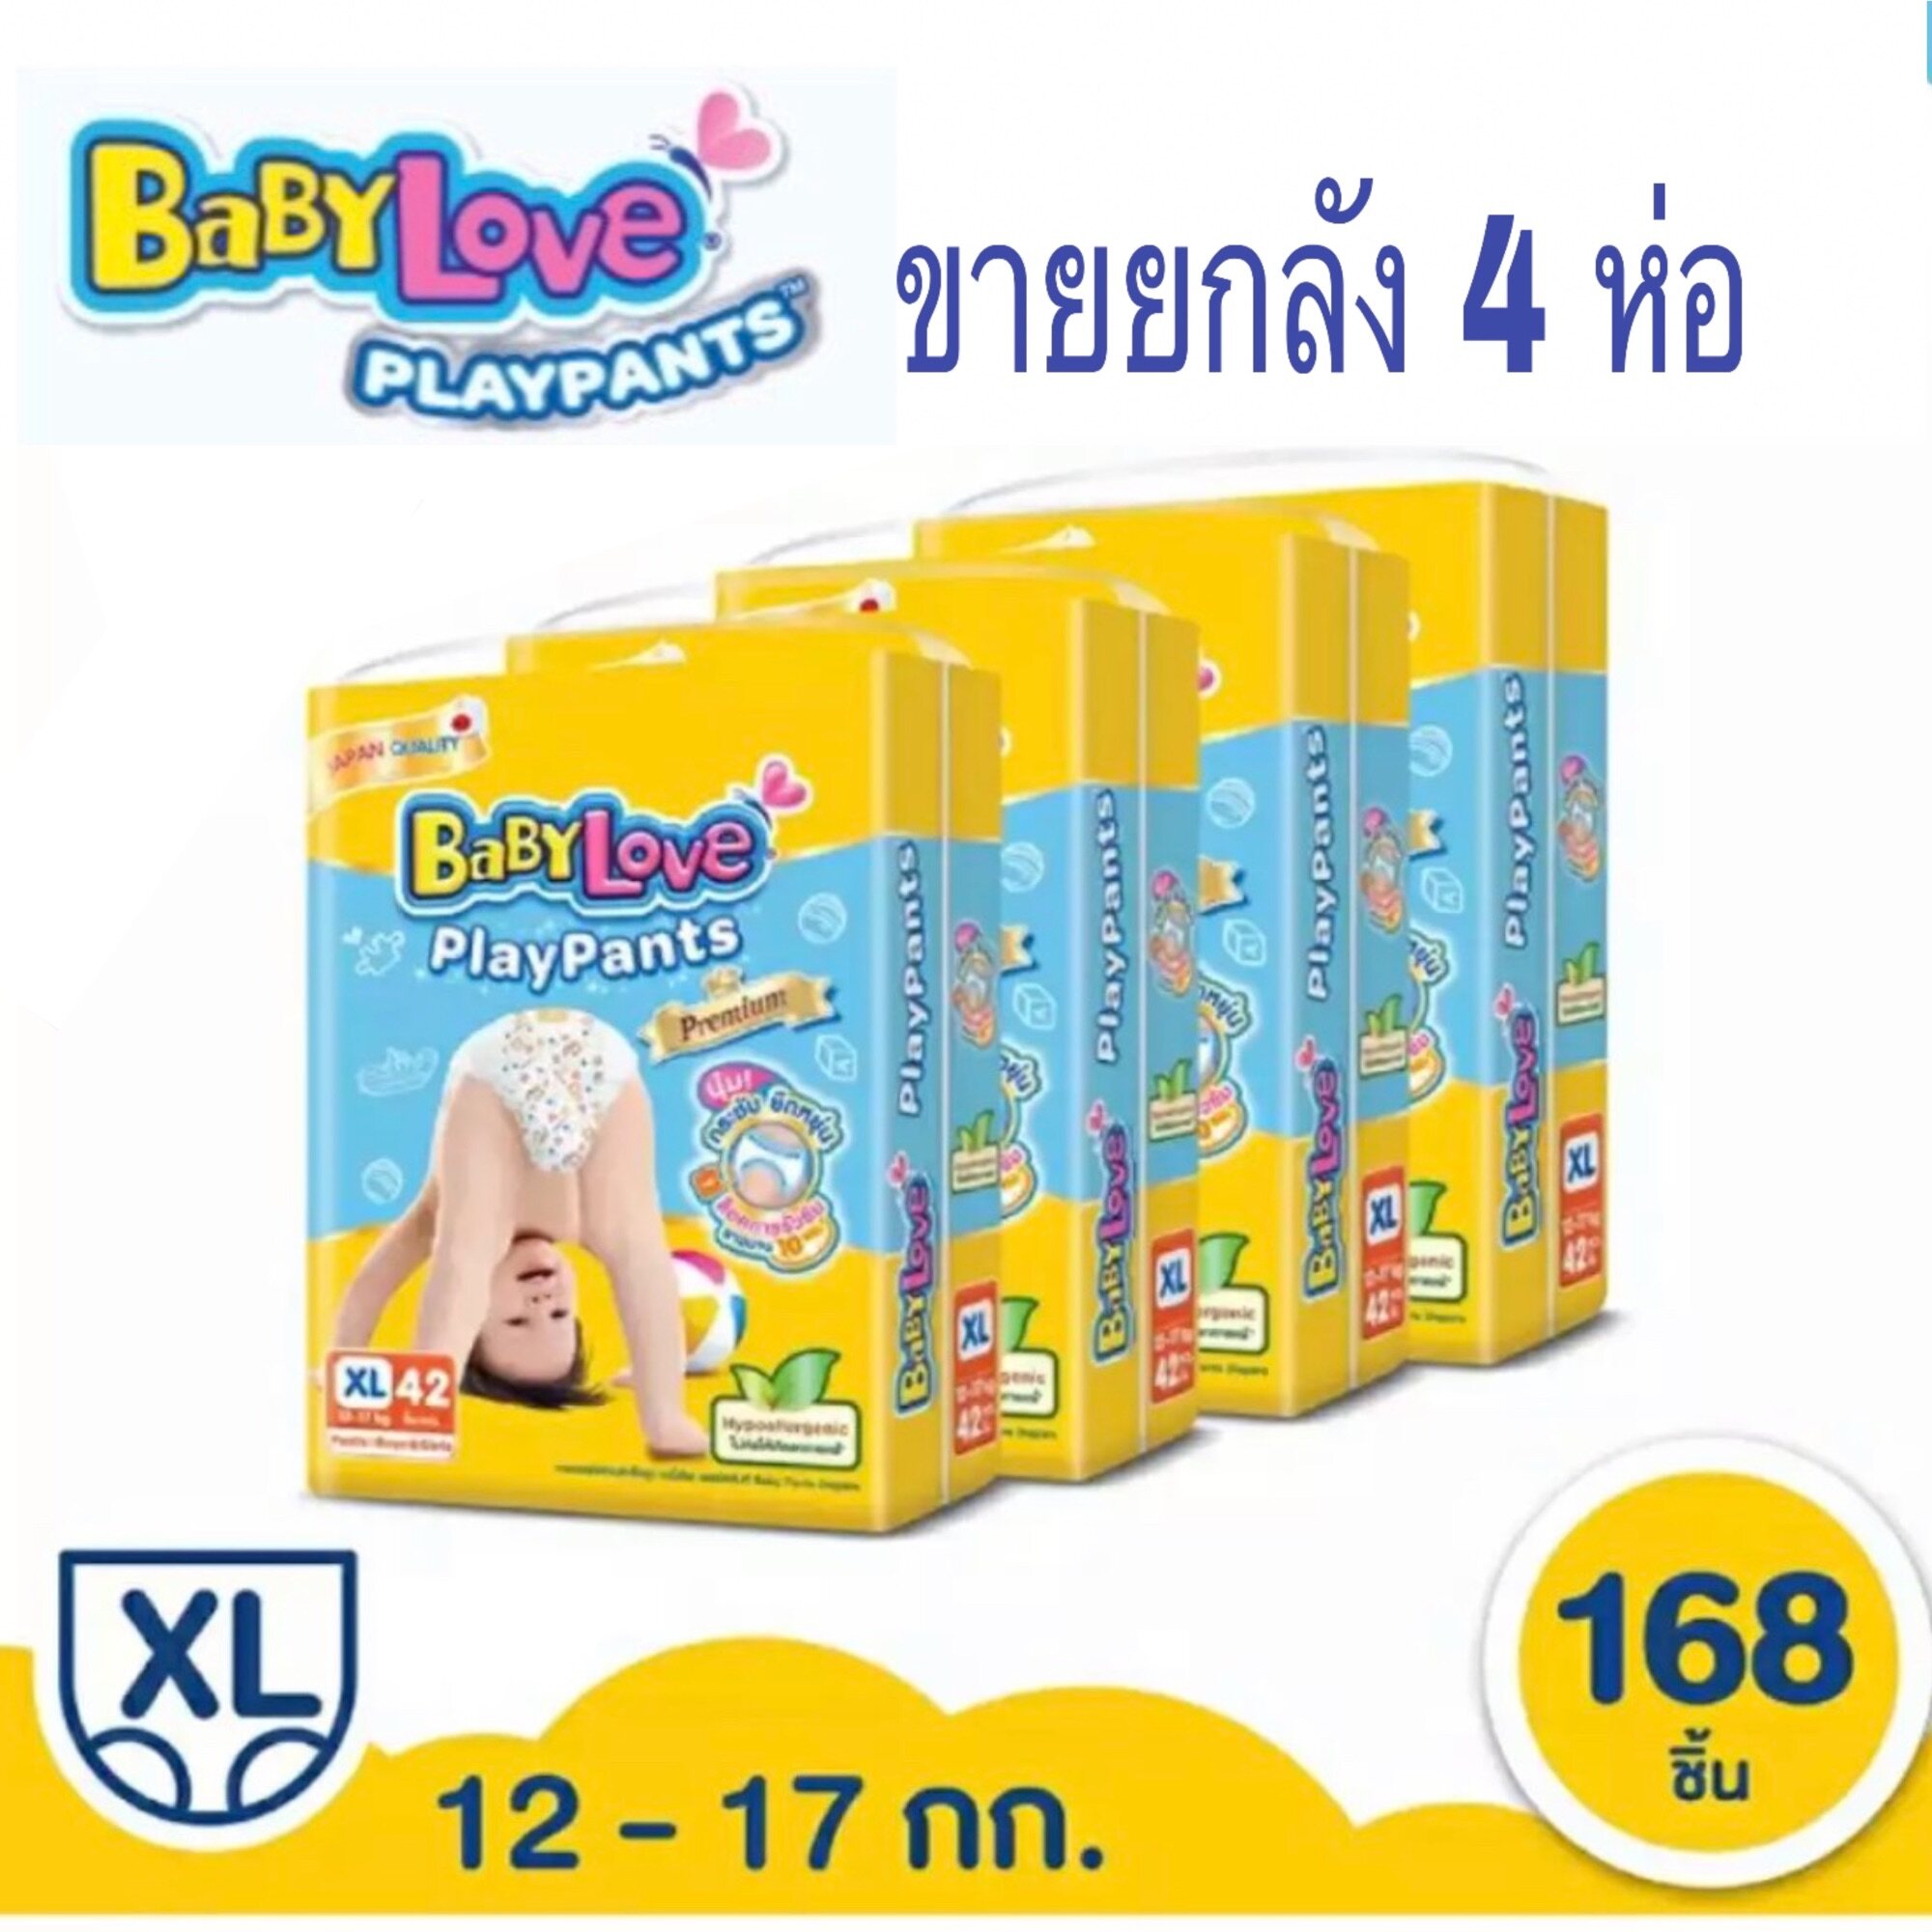 Babylove PlayPants Premium เบบี้เลิฟ เพลย์แพ้นส์ XL 42 ชิ้น **ขายยกลัง 4 ห่อ**